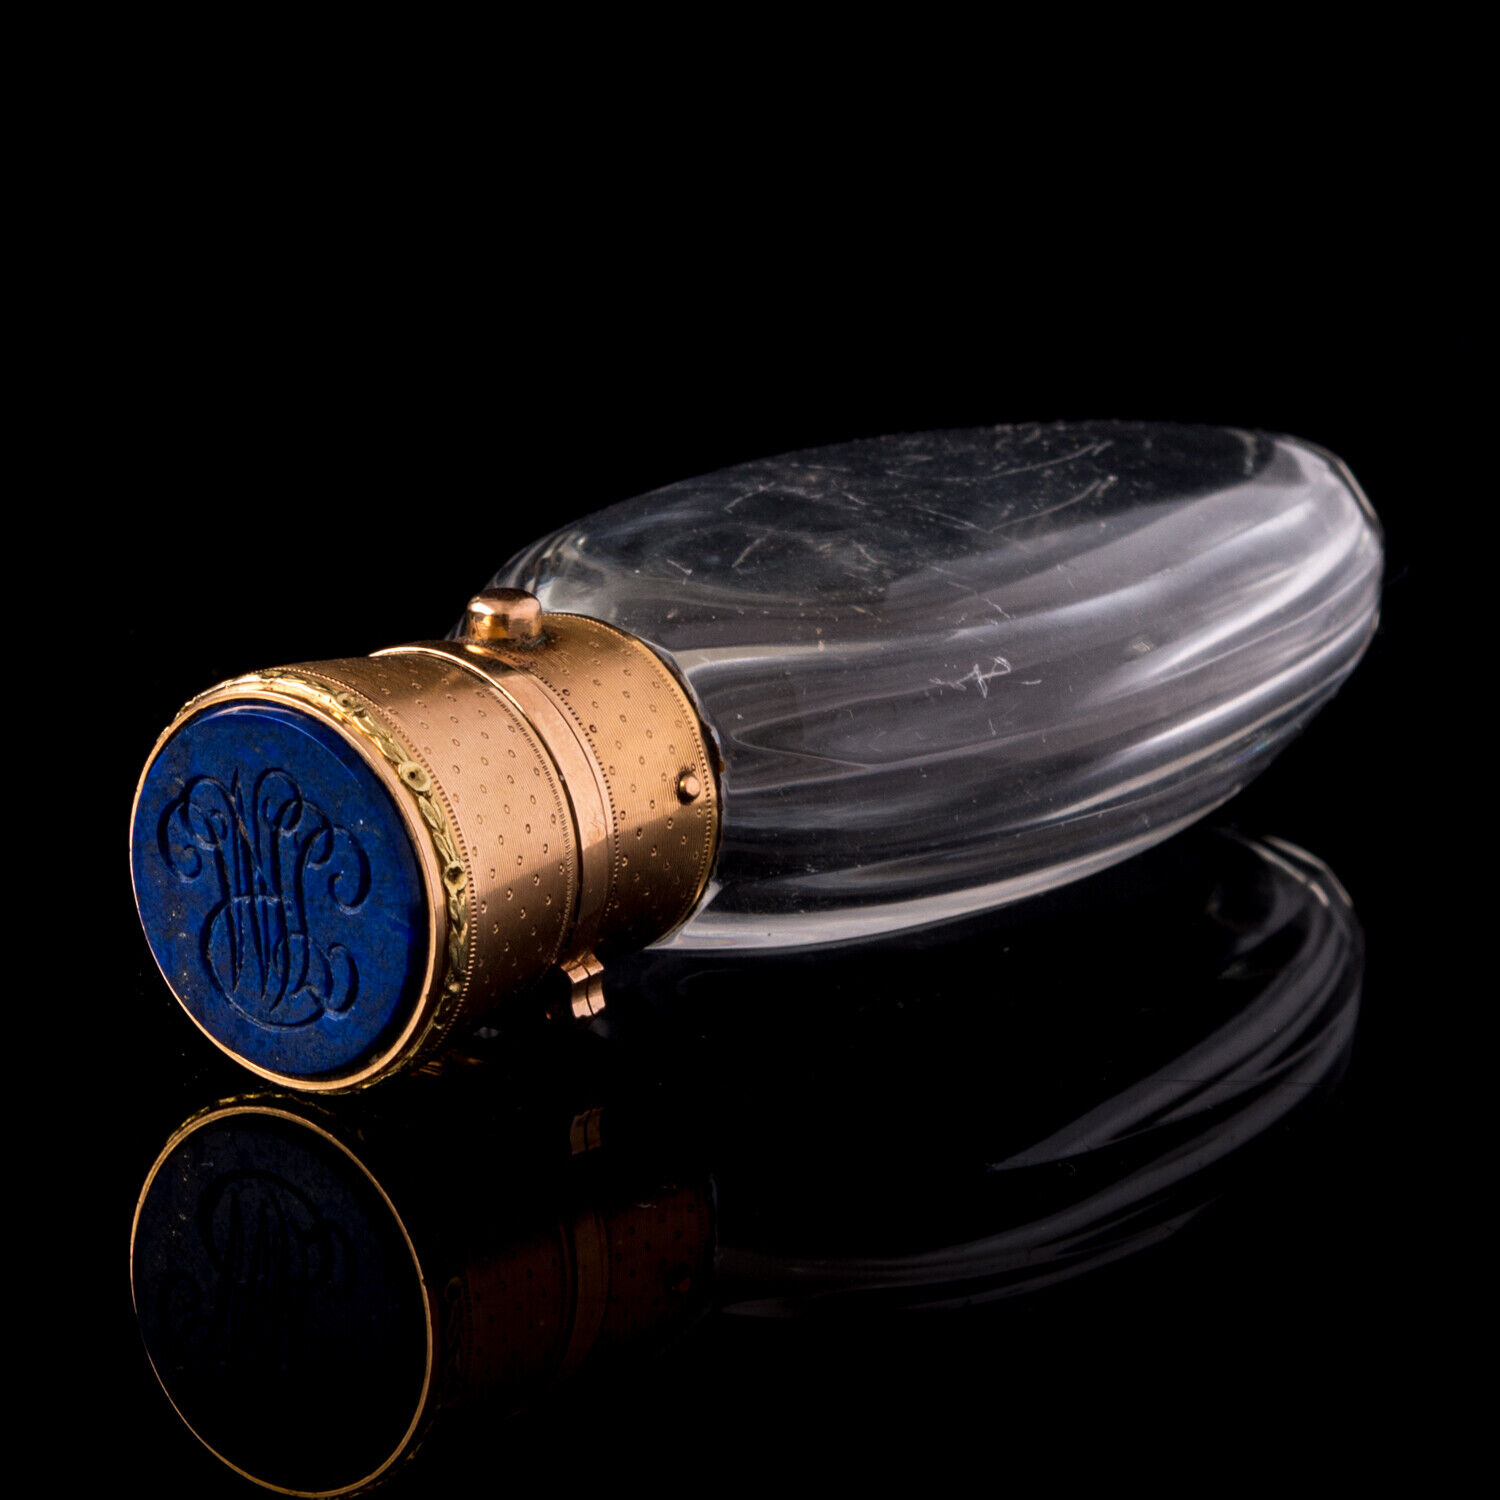 Antique Gold and Lapis Lazuli Mounted Scent Bottle Signed Boucheron France c1890